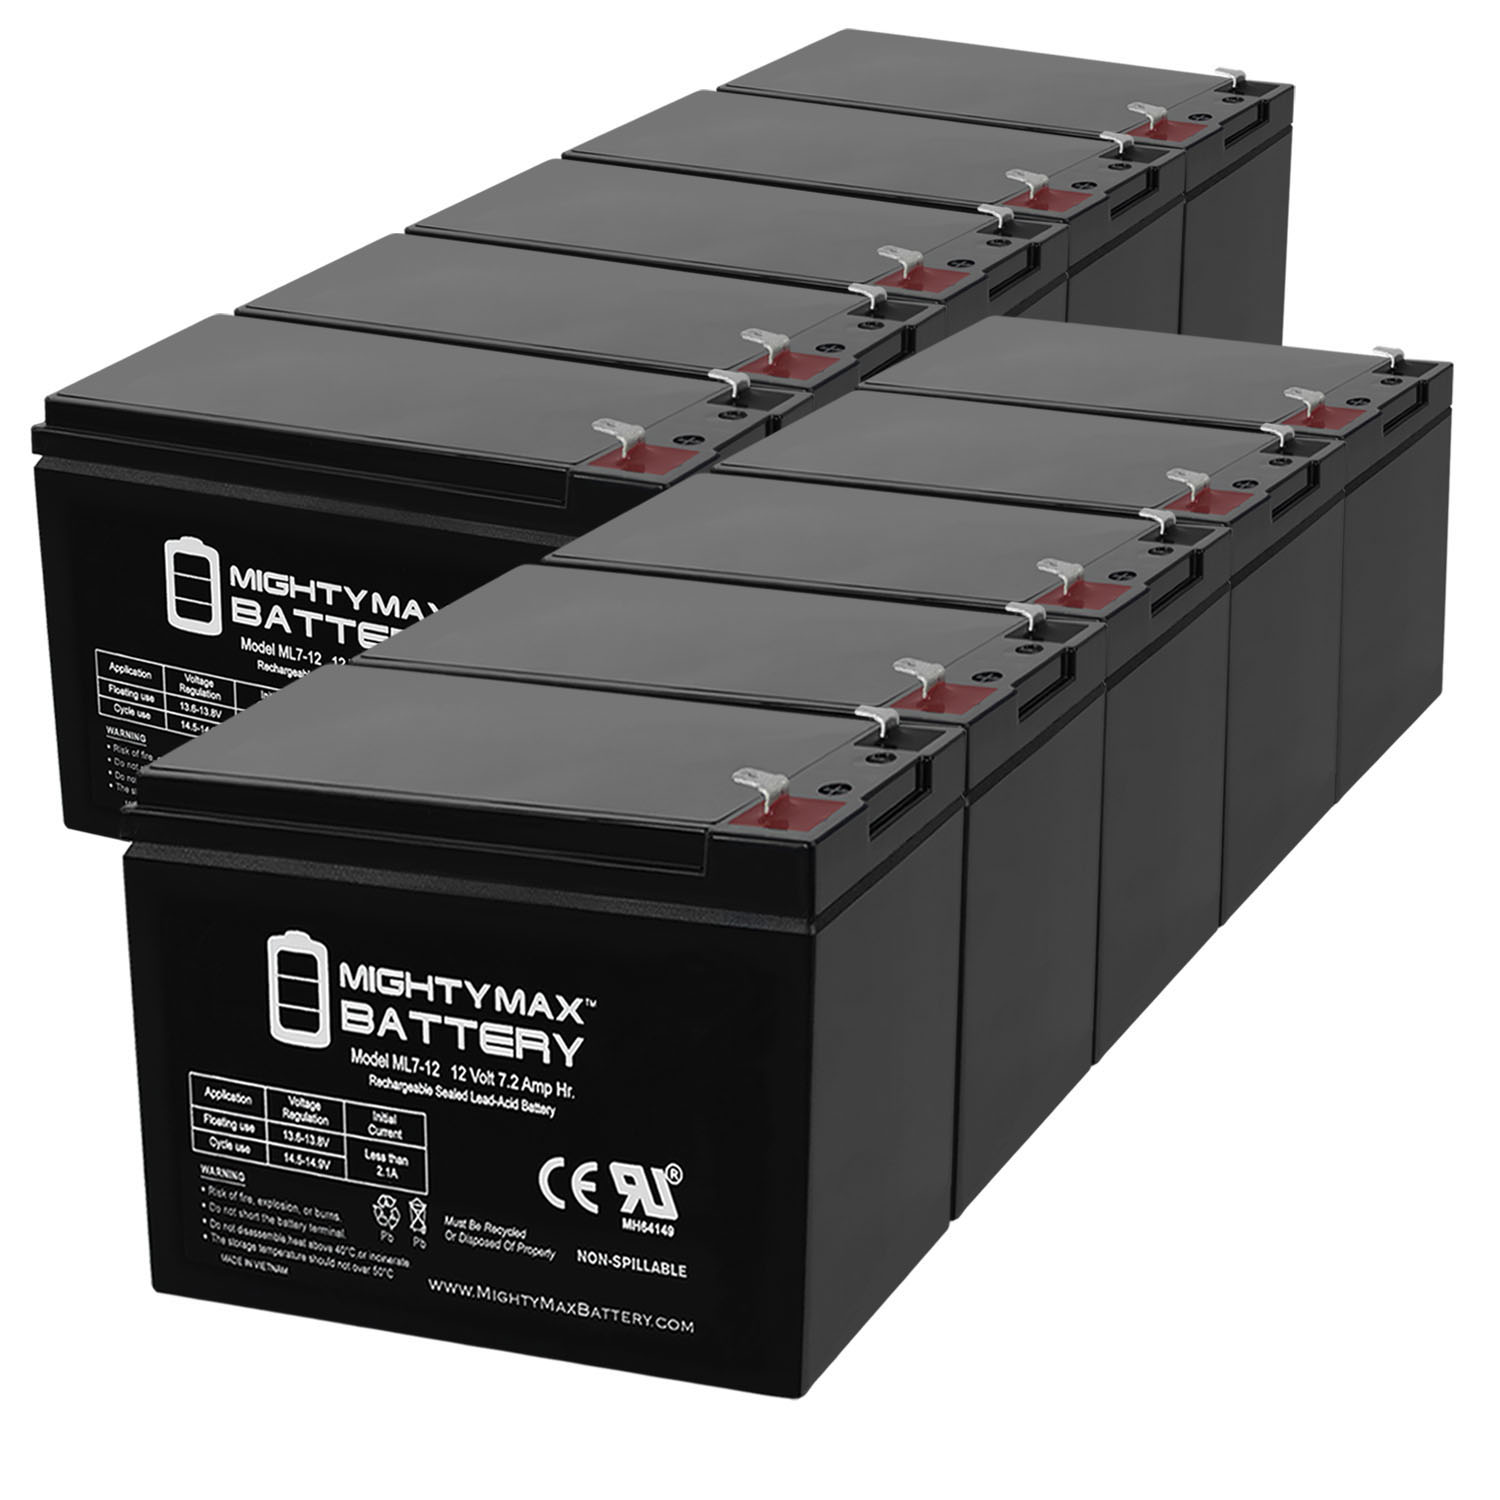 Max battery. Батарея APC 4x12v 7ah rbc23. Leoch DJW 12-7,0. Pk1270 12v7.0Ah. Аккумулятор sh1228ws.